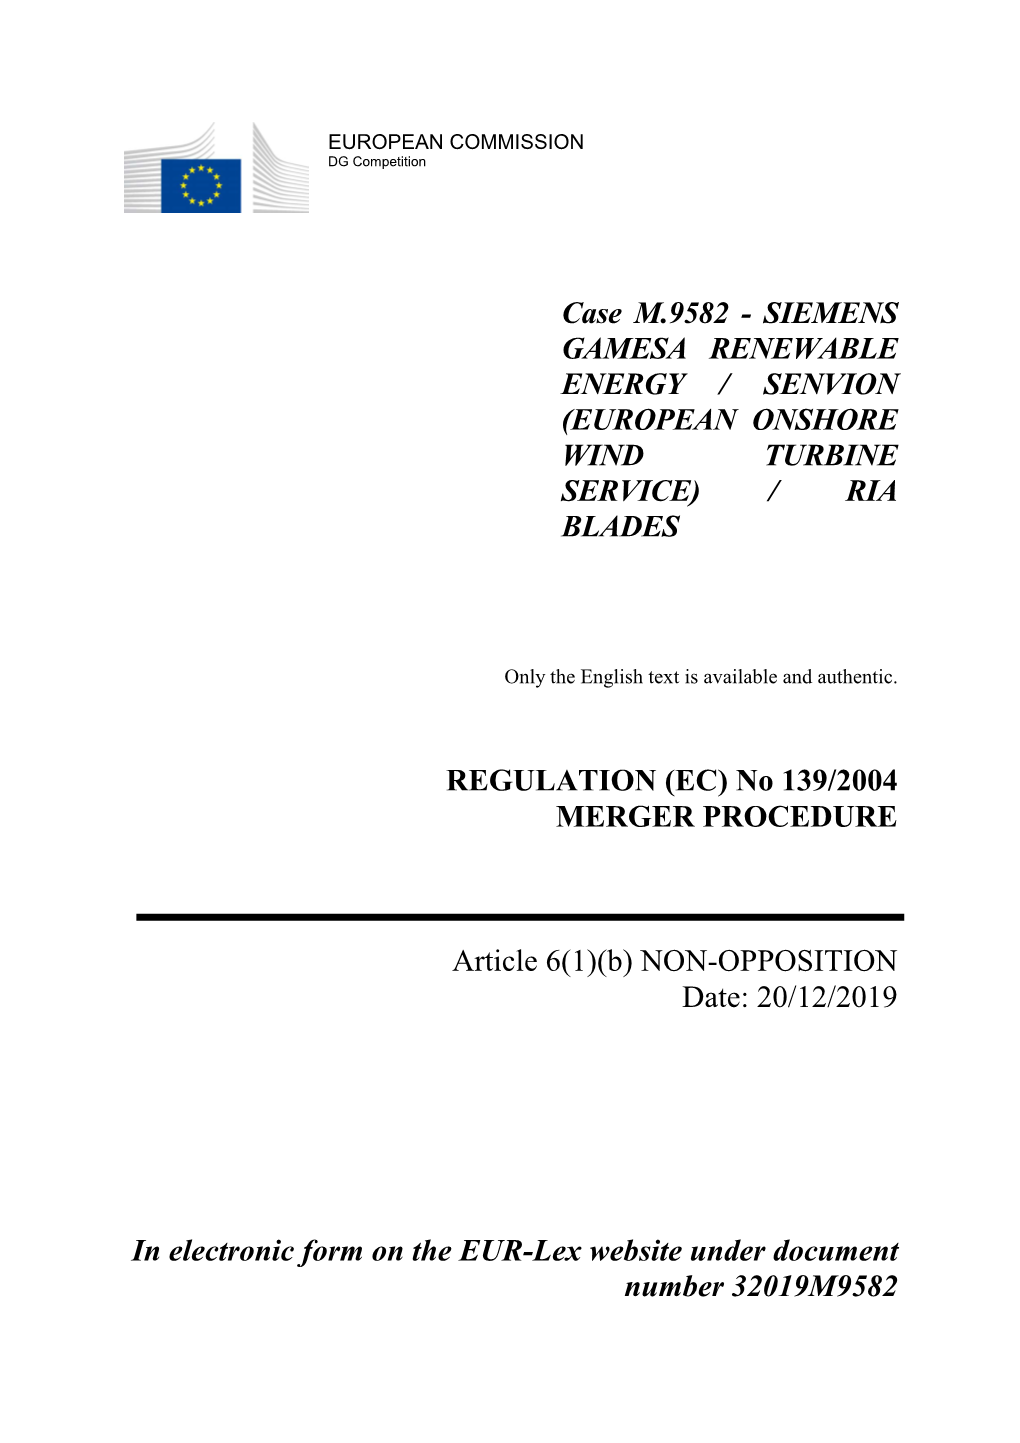 Case M.9582 - SIEMENS GAMESA RENEWABLE ENERGY / SENVION (EUROPEAN ONSHORE WIND TURBINE SERVICE) / RIA BLADES